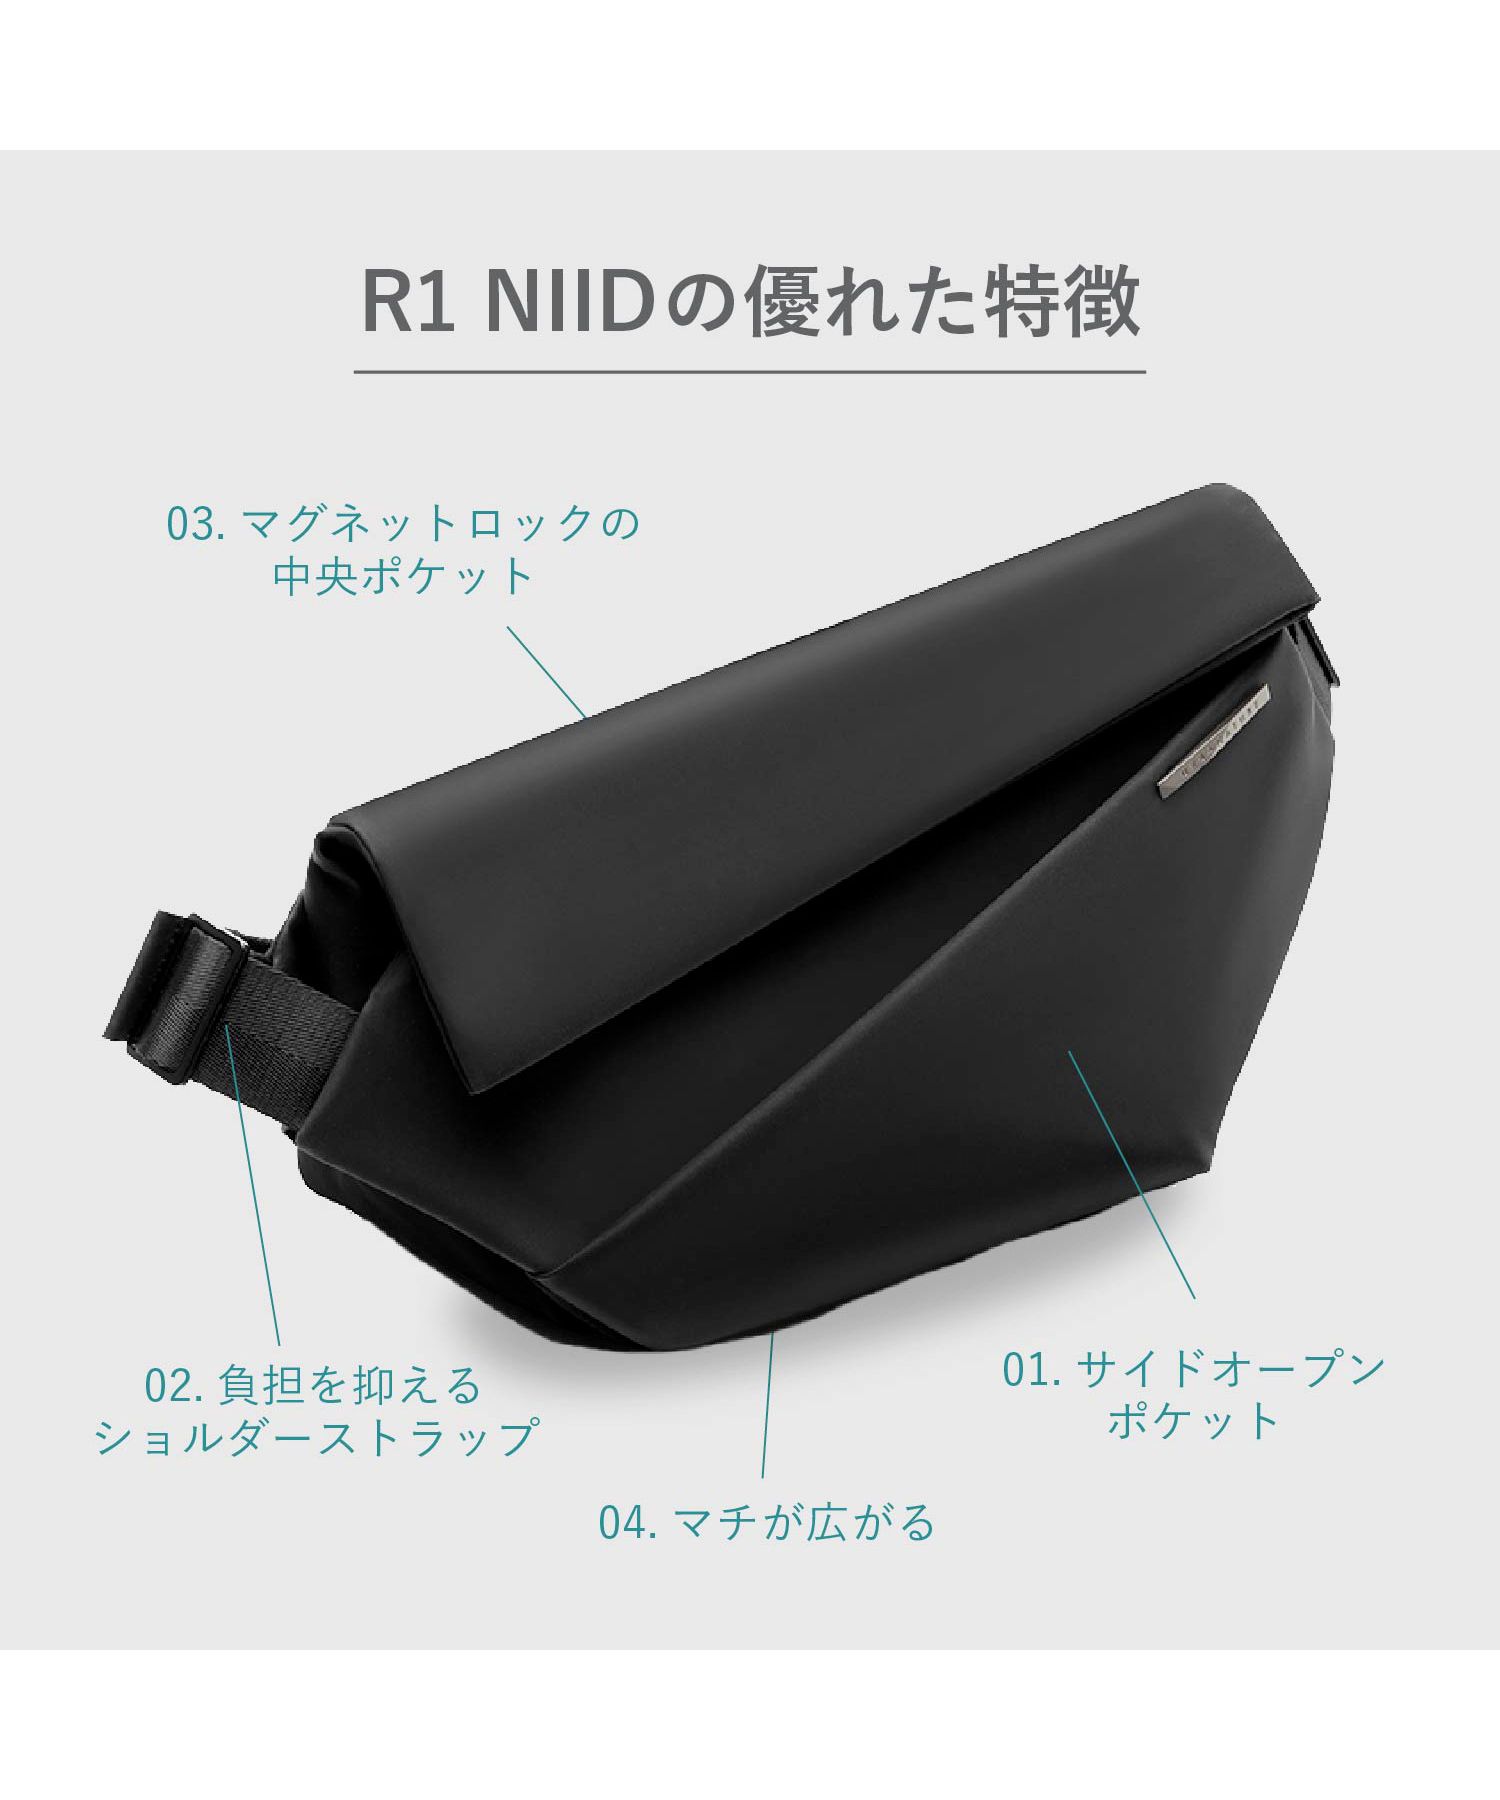 INDIGONIID ニード Radiant R1 Urban Sling チェストバッグ